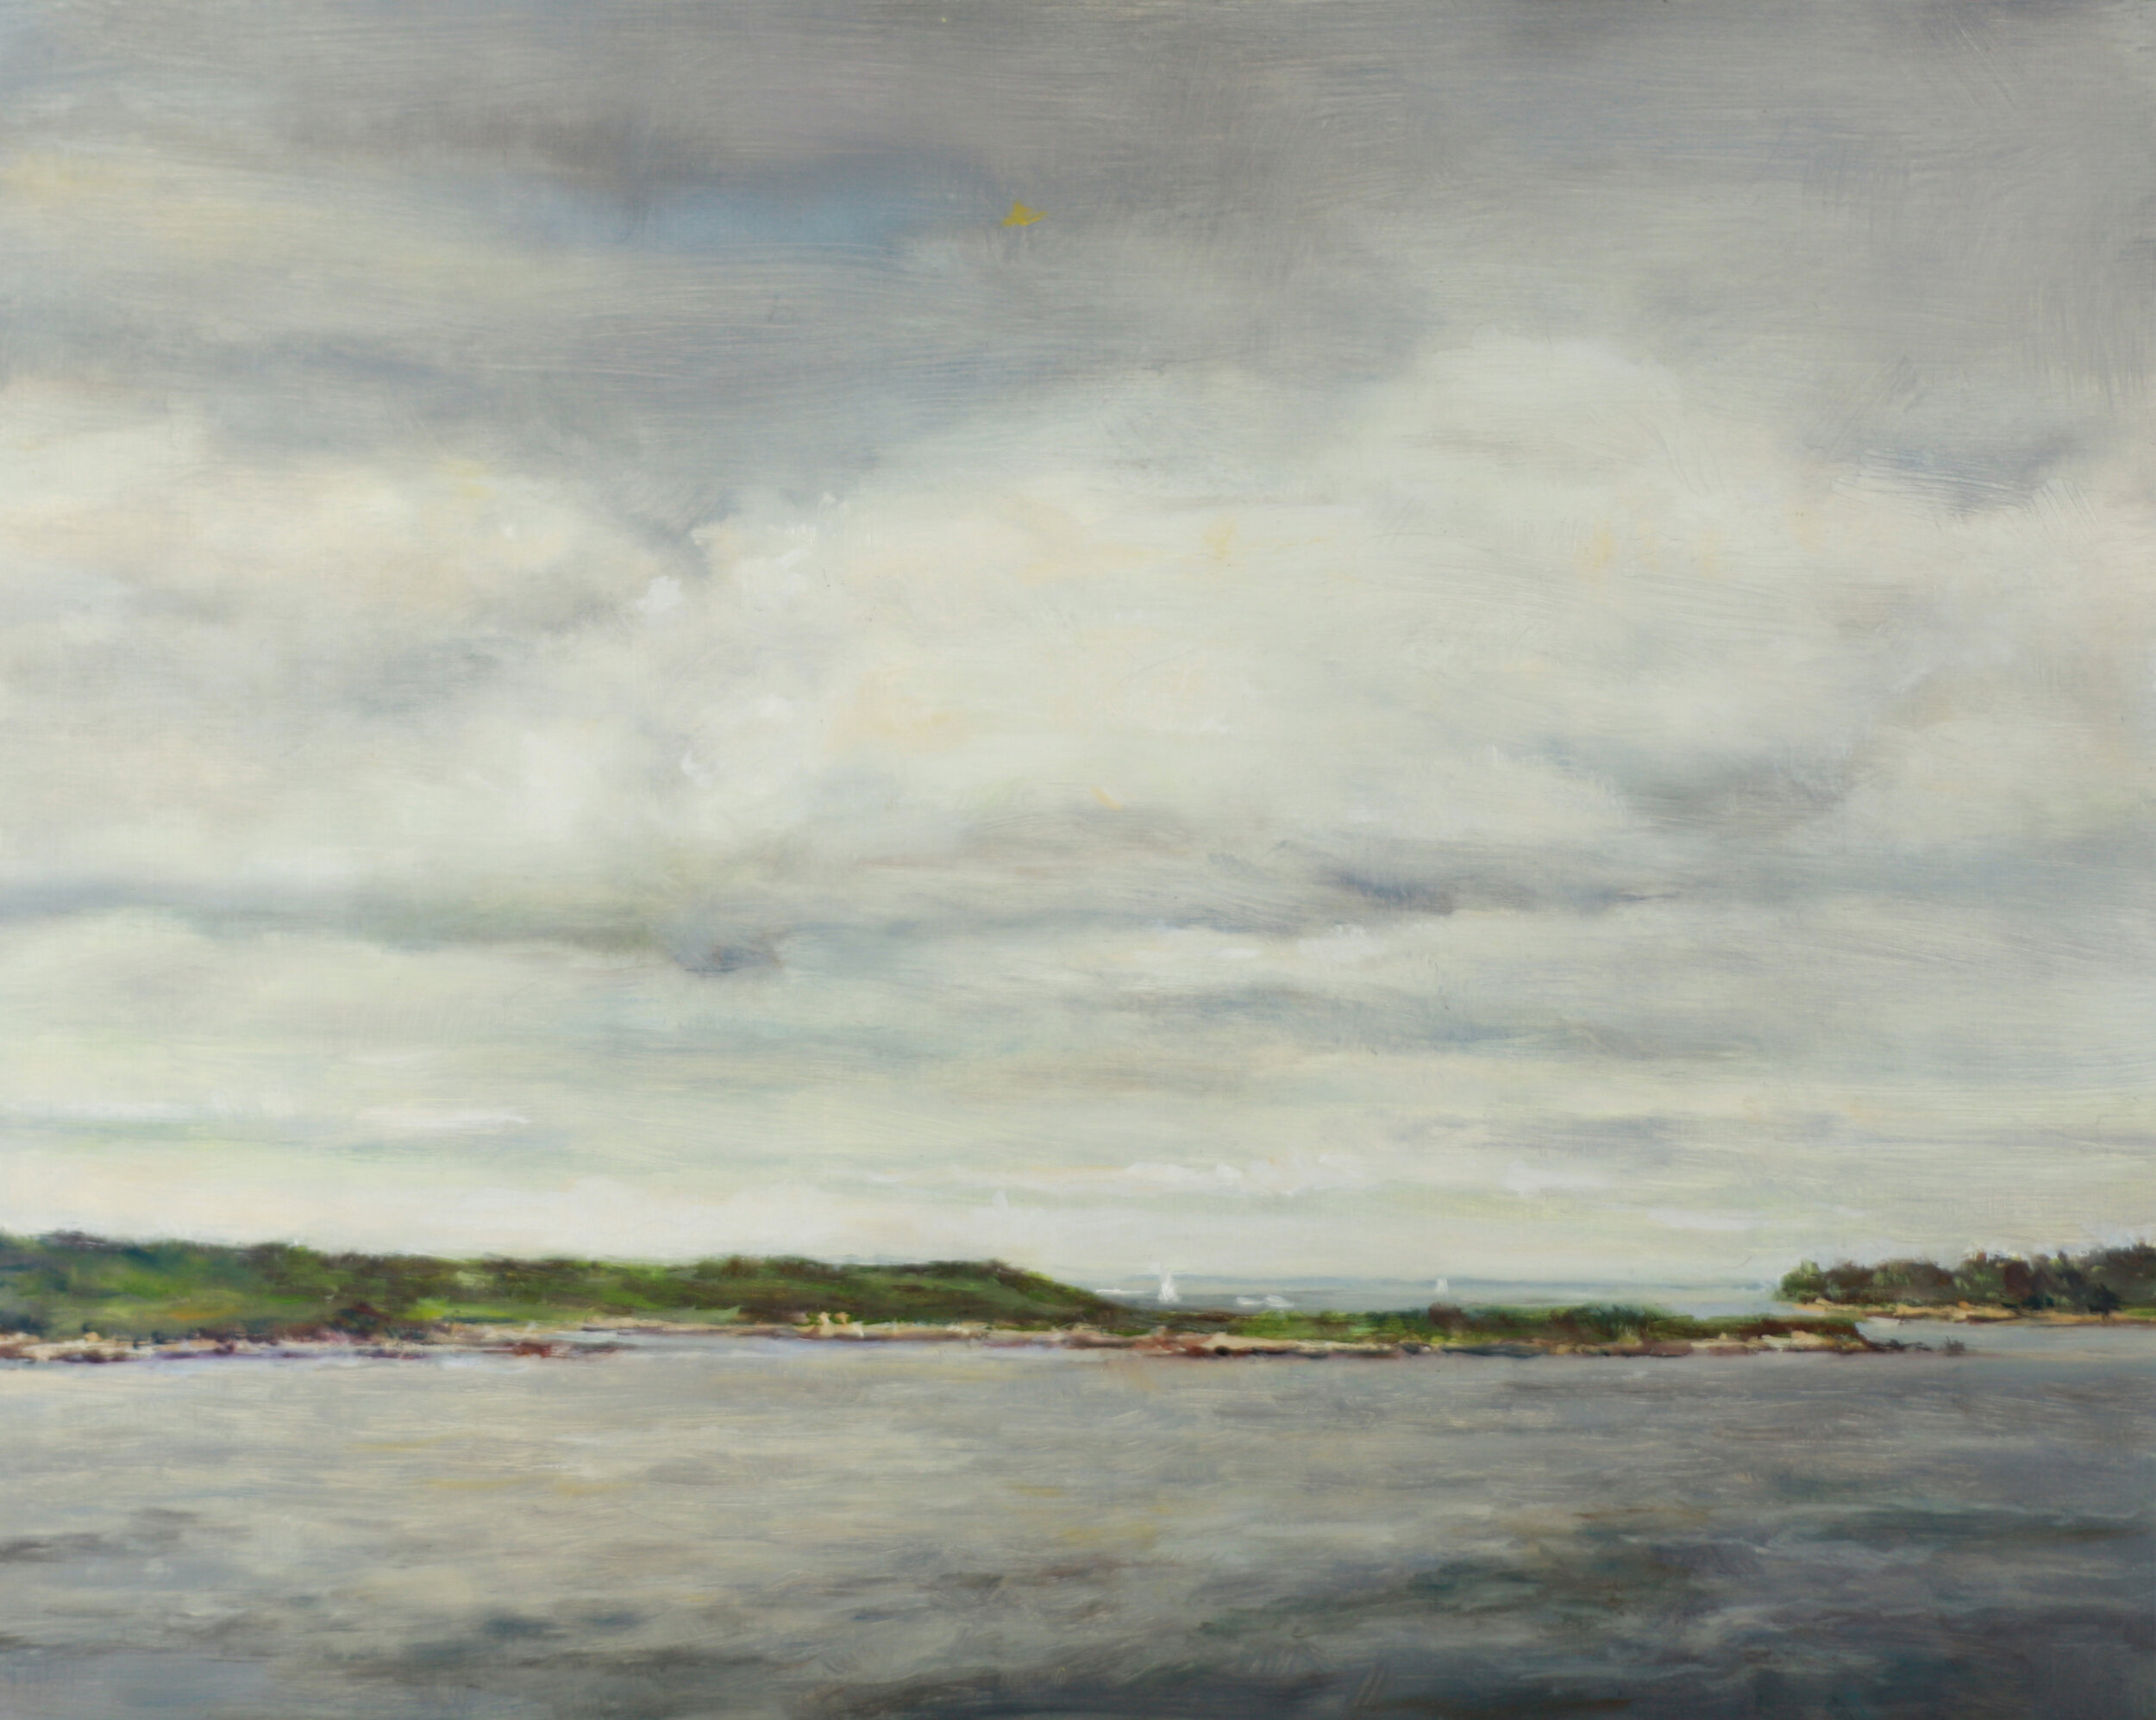  Mary Lou Schempf  Stonington Grey Sea 2, 8” x 10”, oil on board  (private collection)  